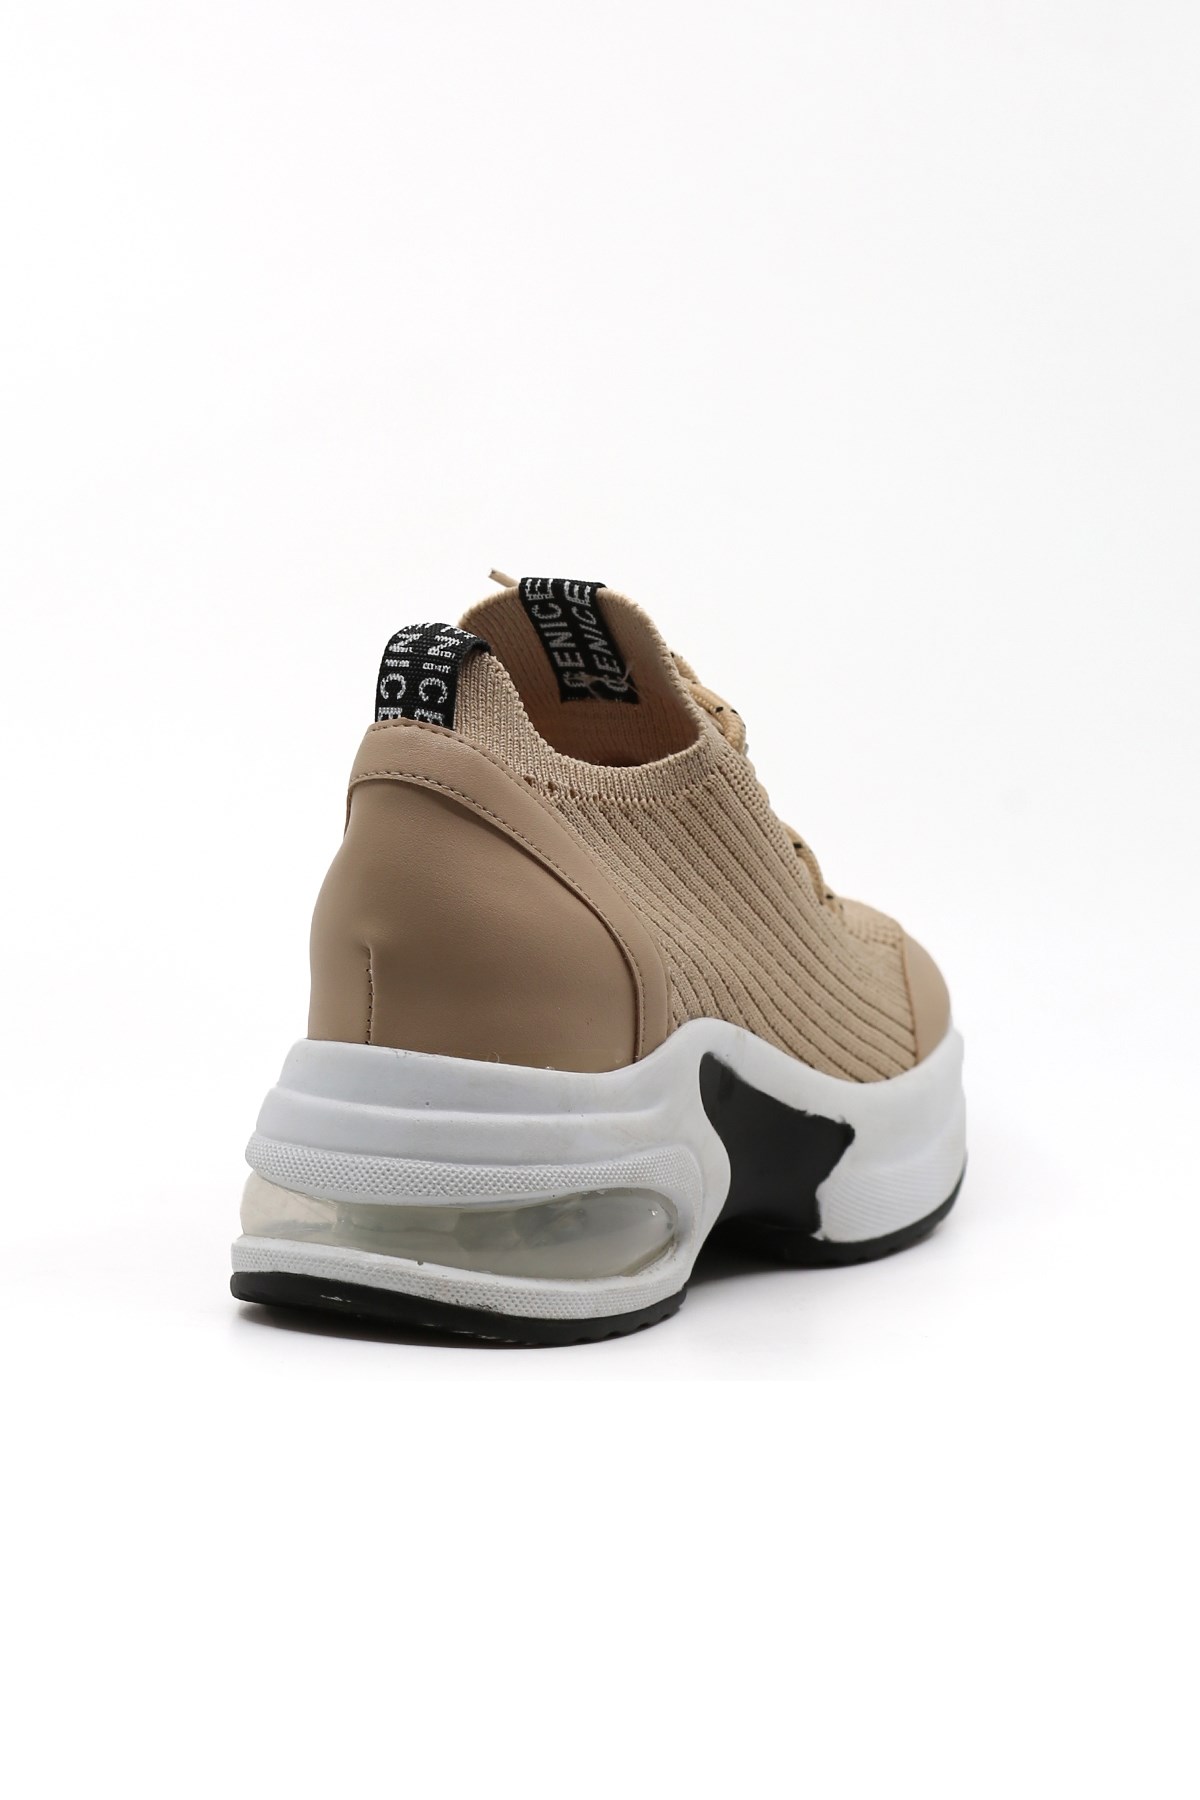 Afrodi̇t Model 10 Cm Gi̇zli̇ Topuk Tri̇ko Detayli Spor Sneakers Spor Ayakkabi Nut